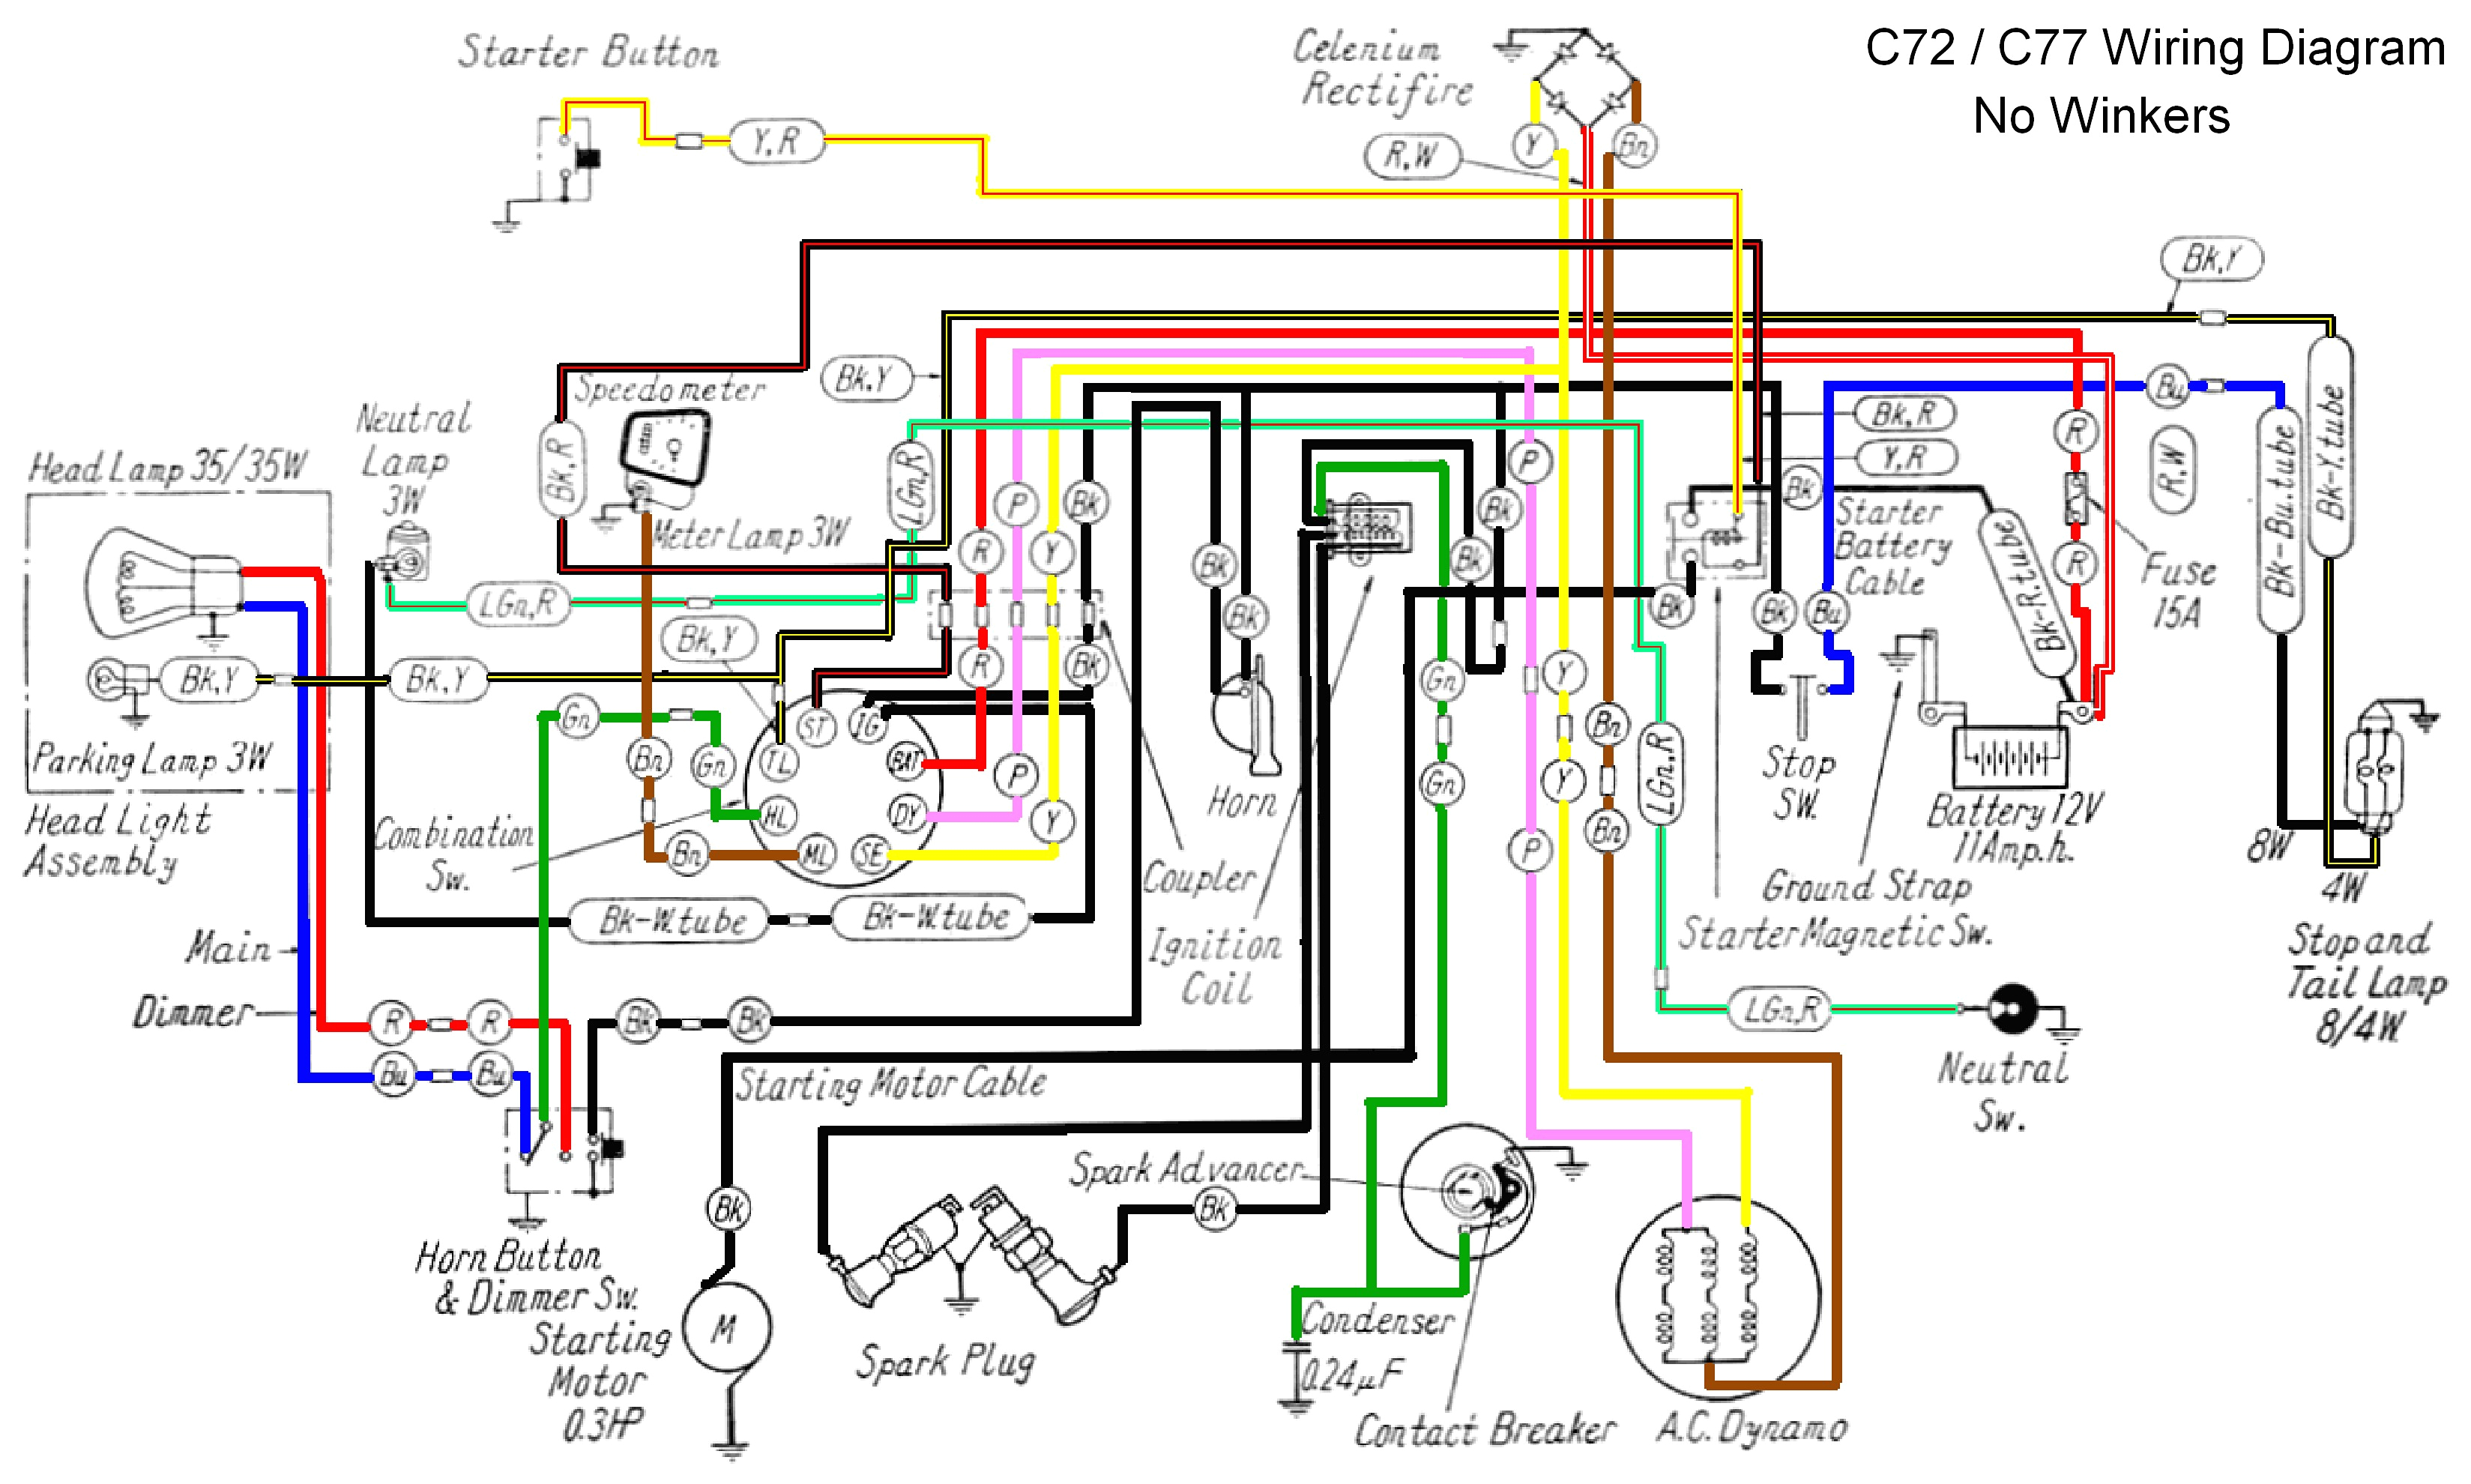 cb750 simple wiring harness data diagram schematic cb750 simple wiring harness manual e book cb750 simple